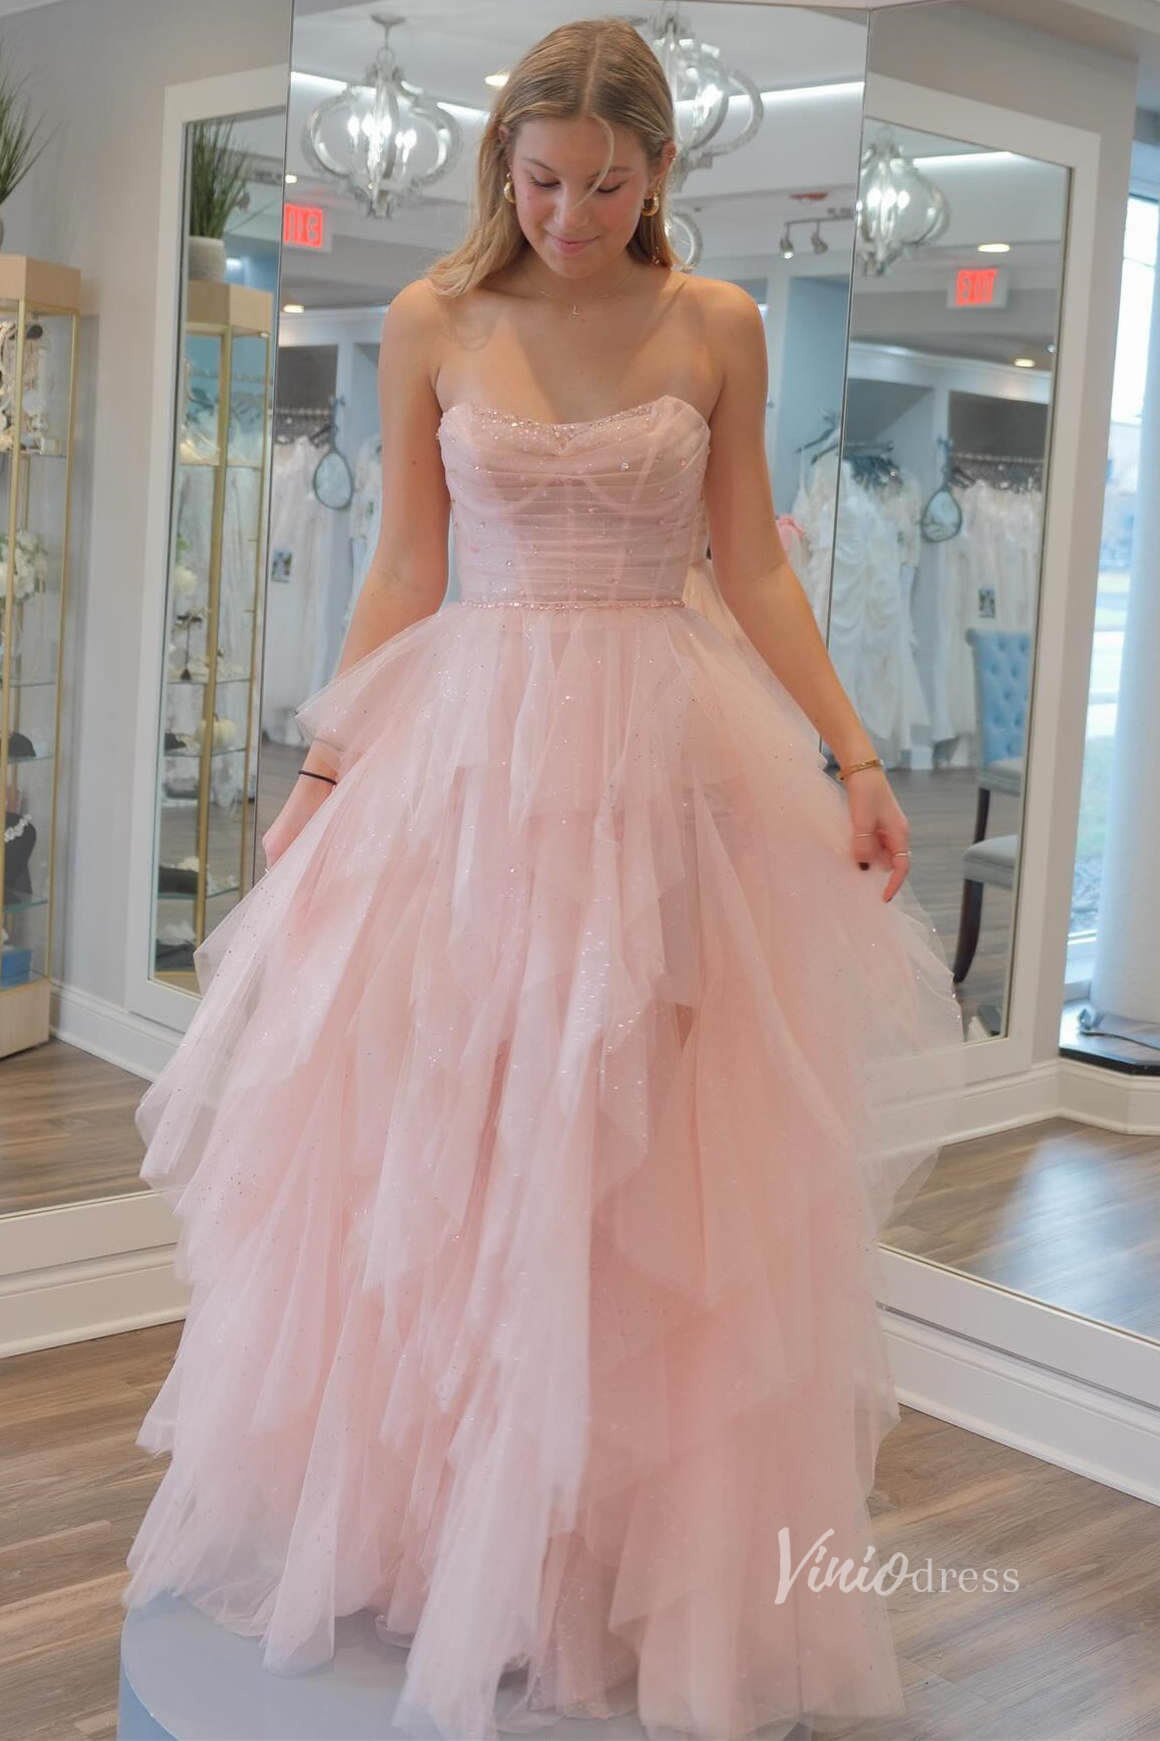 Sparkly Blush Pink Tiered Prom Dresses Strapless Pleated Boned Bodice FD4035-prom dresses-Viniodress-Blush Pink-Custom Size-Viniodress